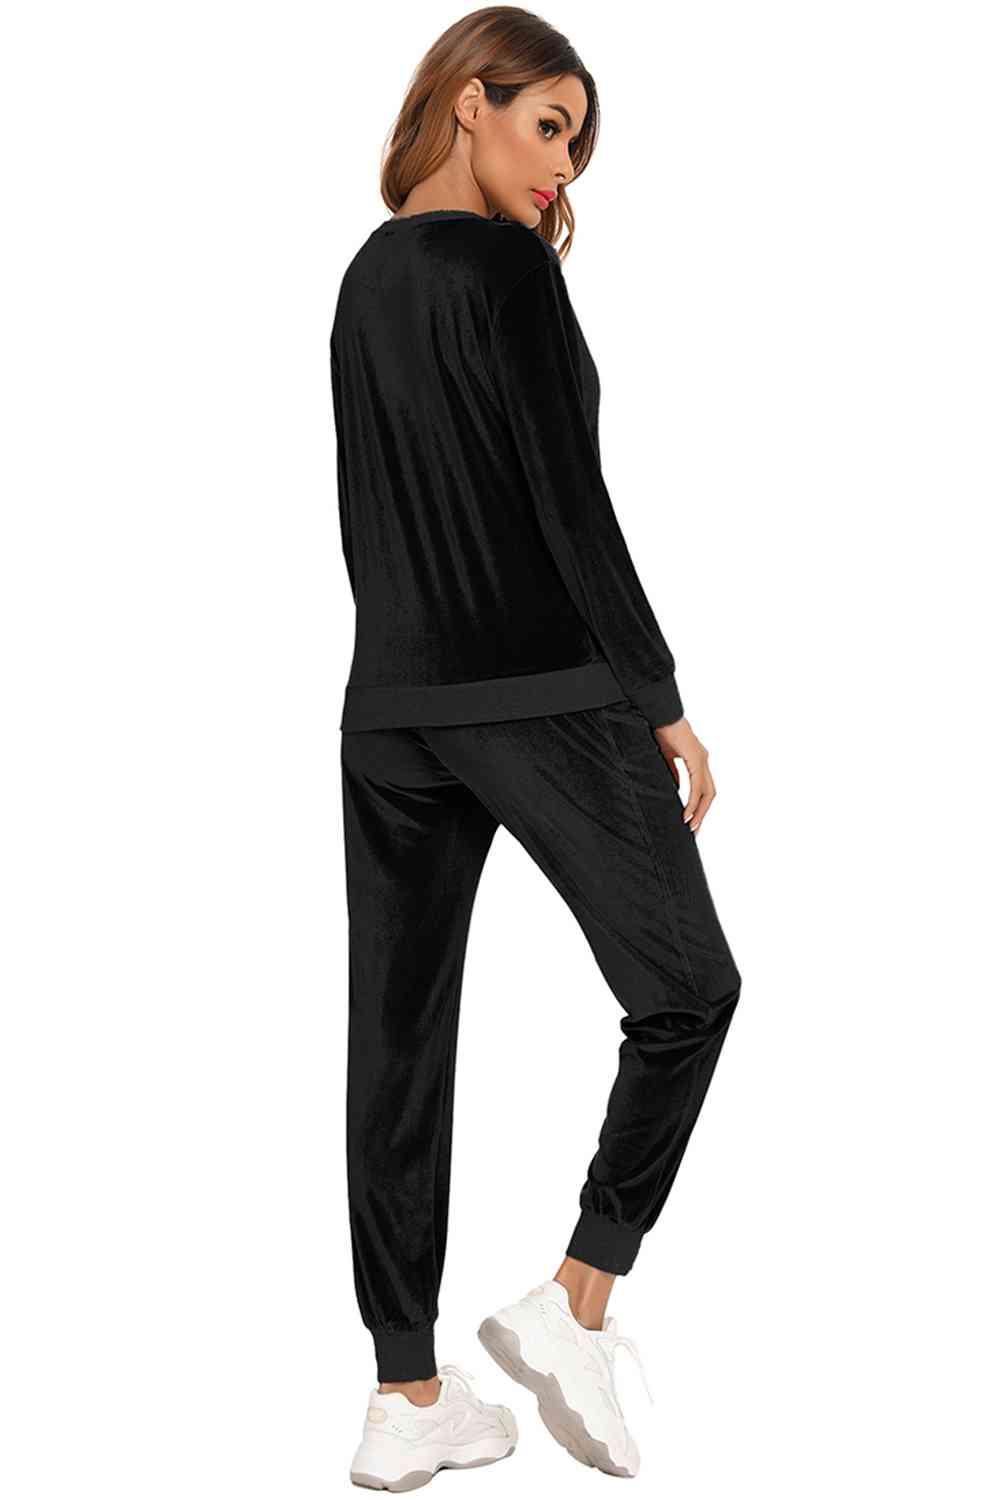 Round Neck Long Sleeve Loungewear Set with Pockets - Vesteeto